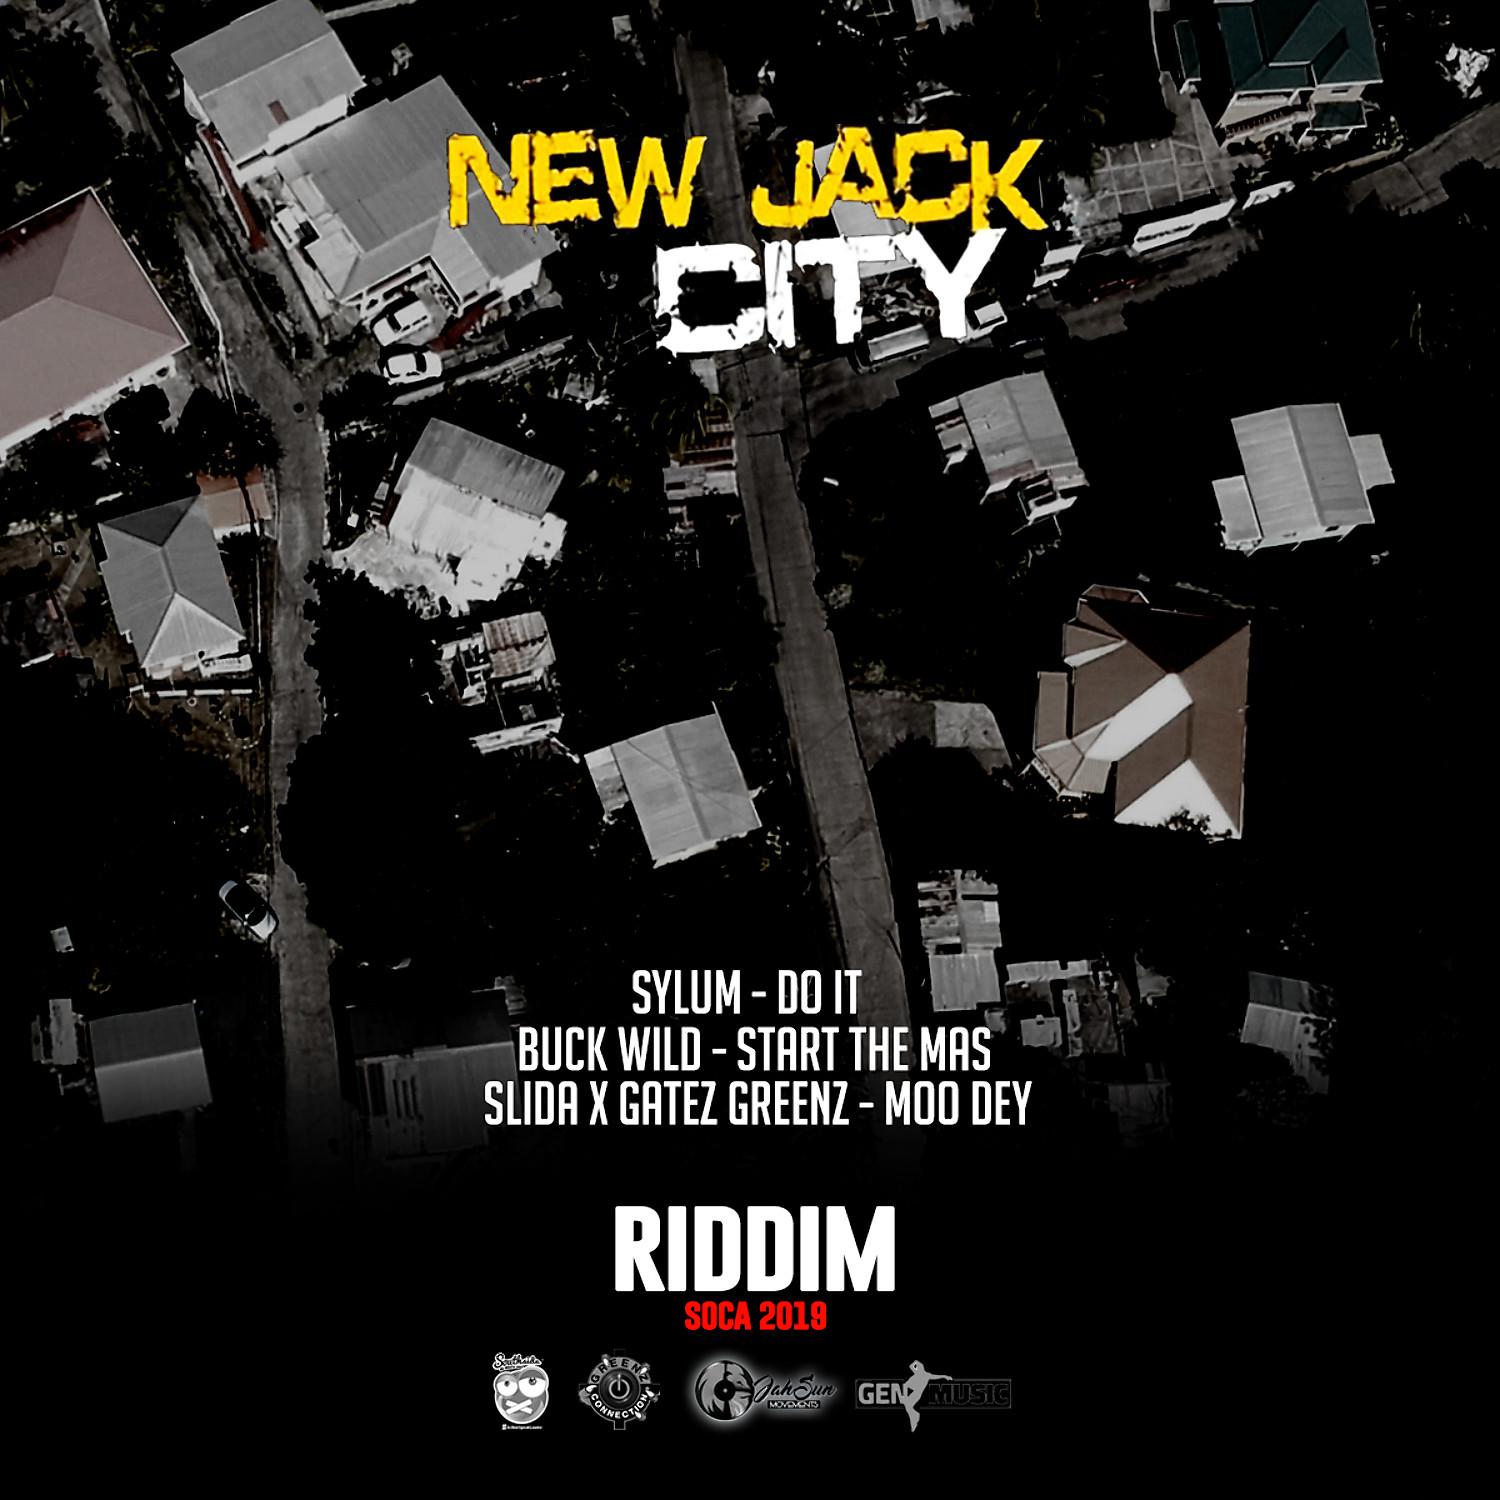 New Jack City Riddim